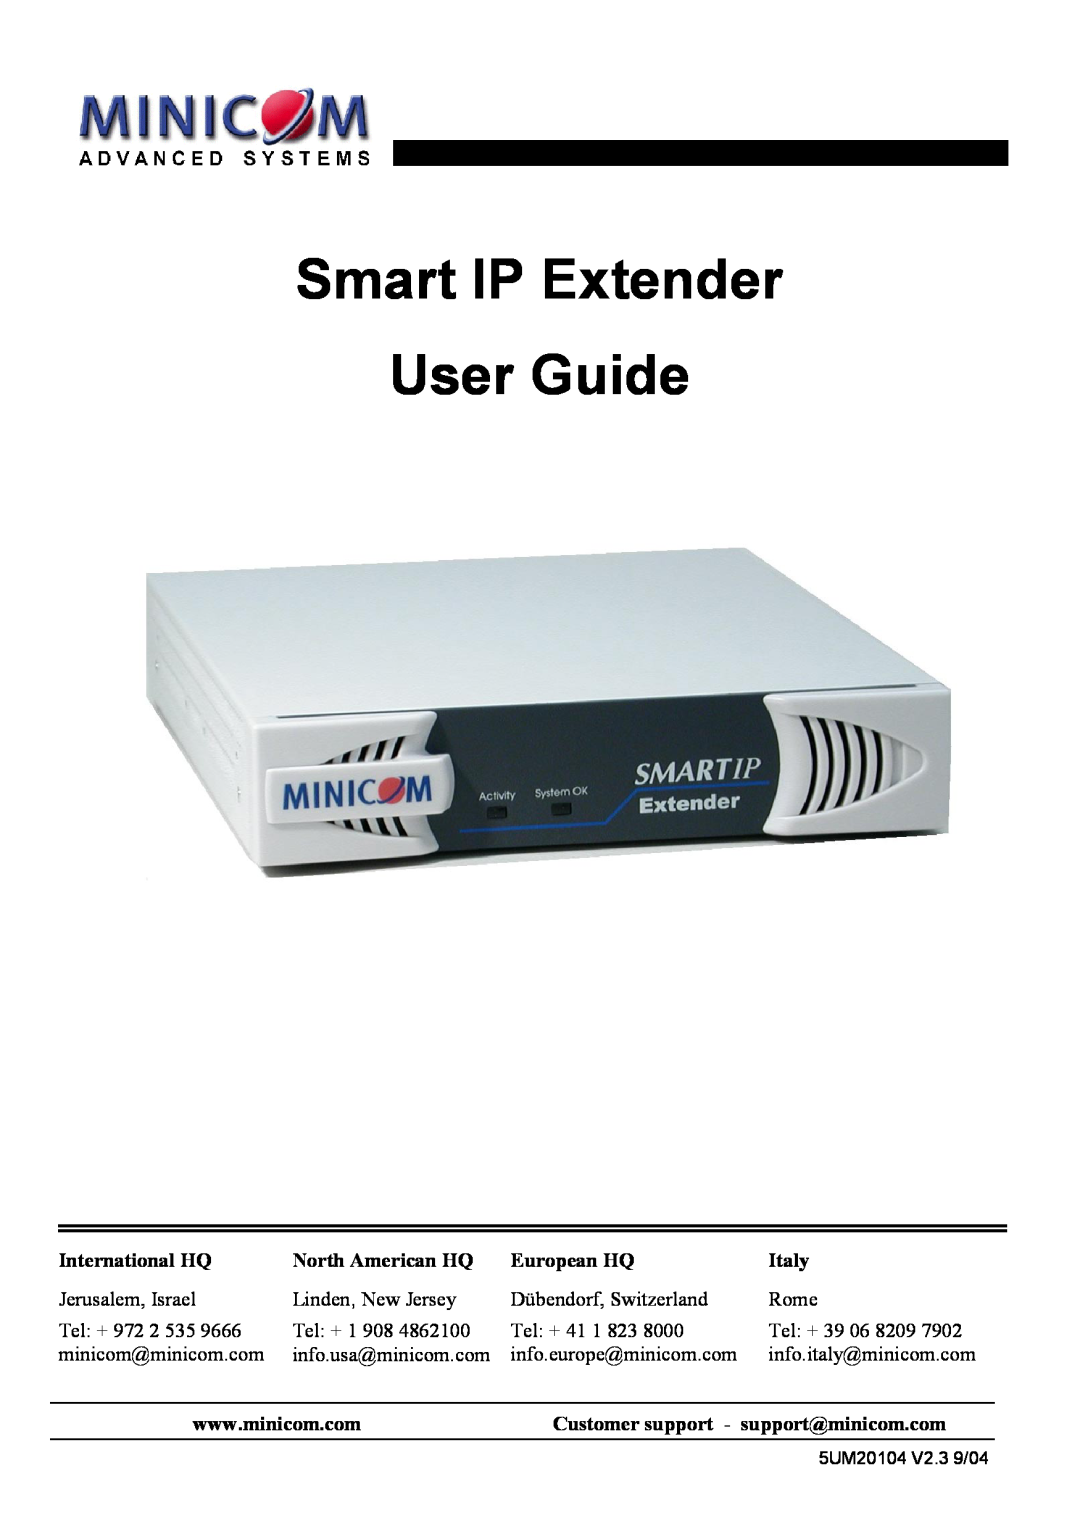 Minicom Advanced Systems manual Smart IP Extender User Guide, International HQ, North American HQ, European HQ, Italy 